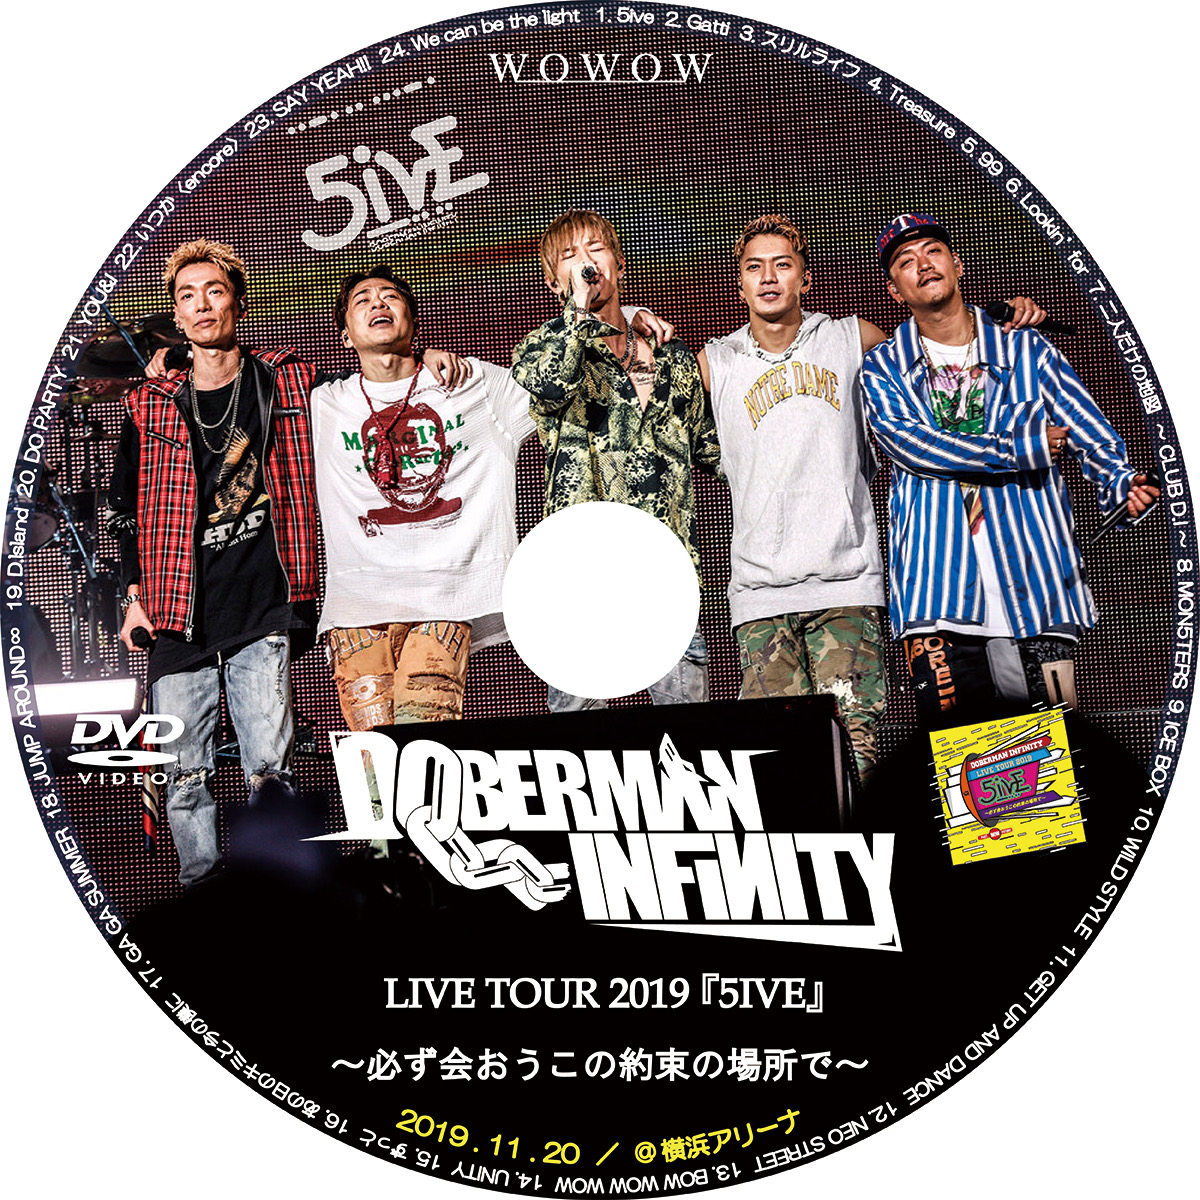 Doberman Infinity Live Tour 19 5ive 必ず会おうこの約束の場所で Wowowライブ レーベル屋さん